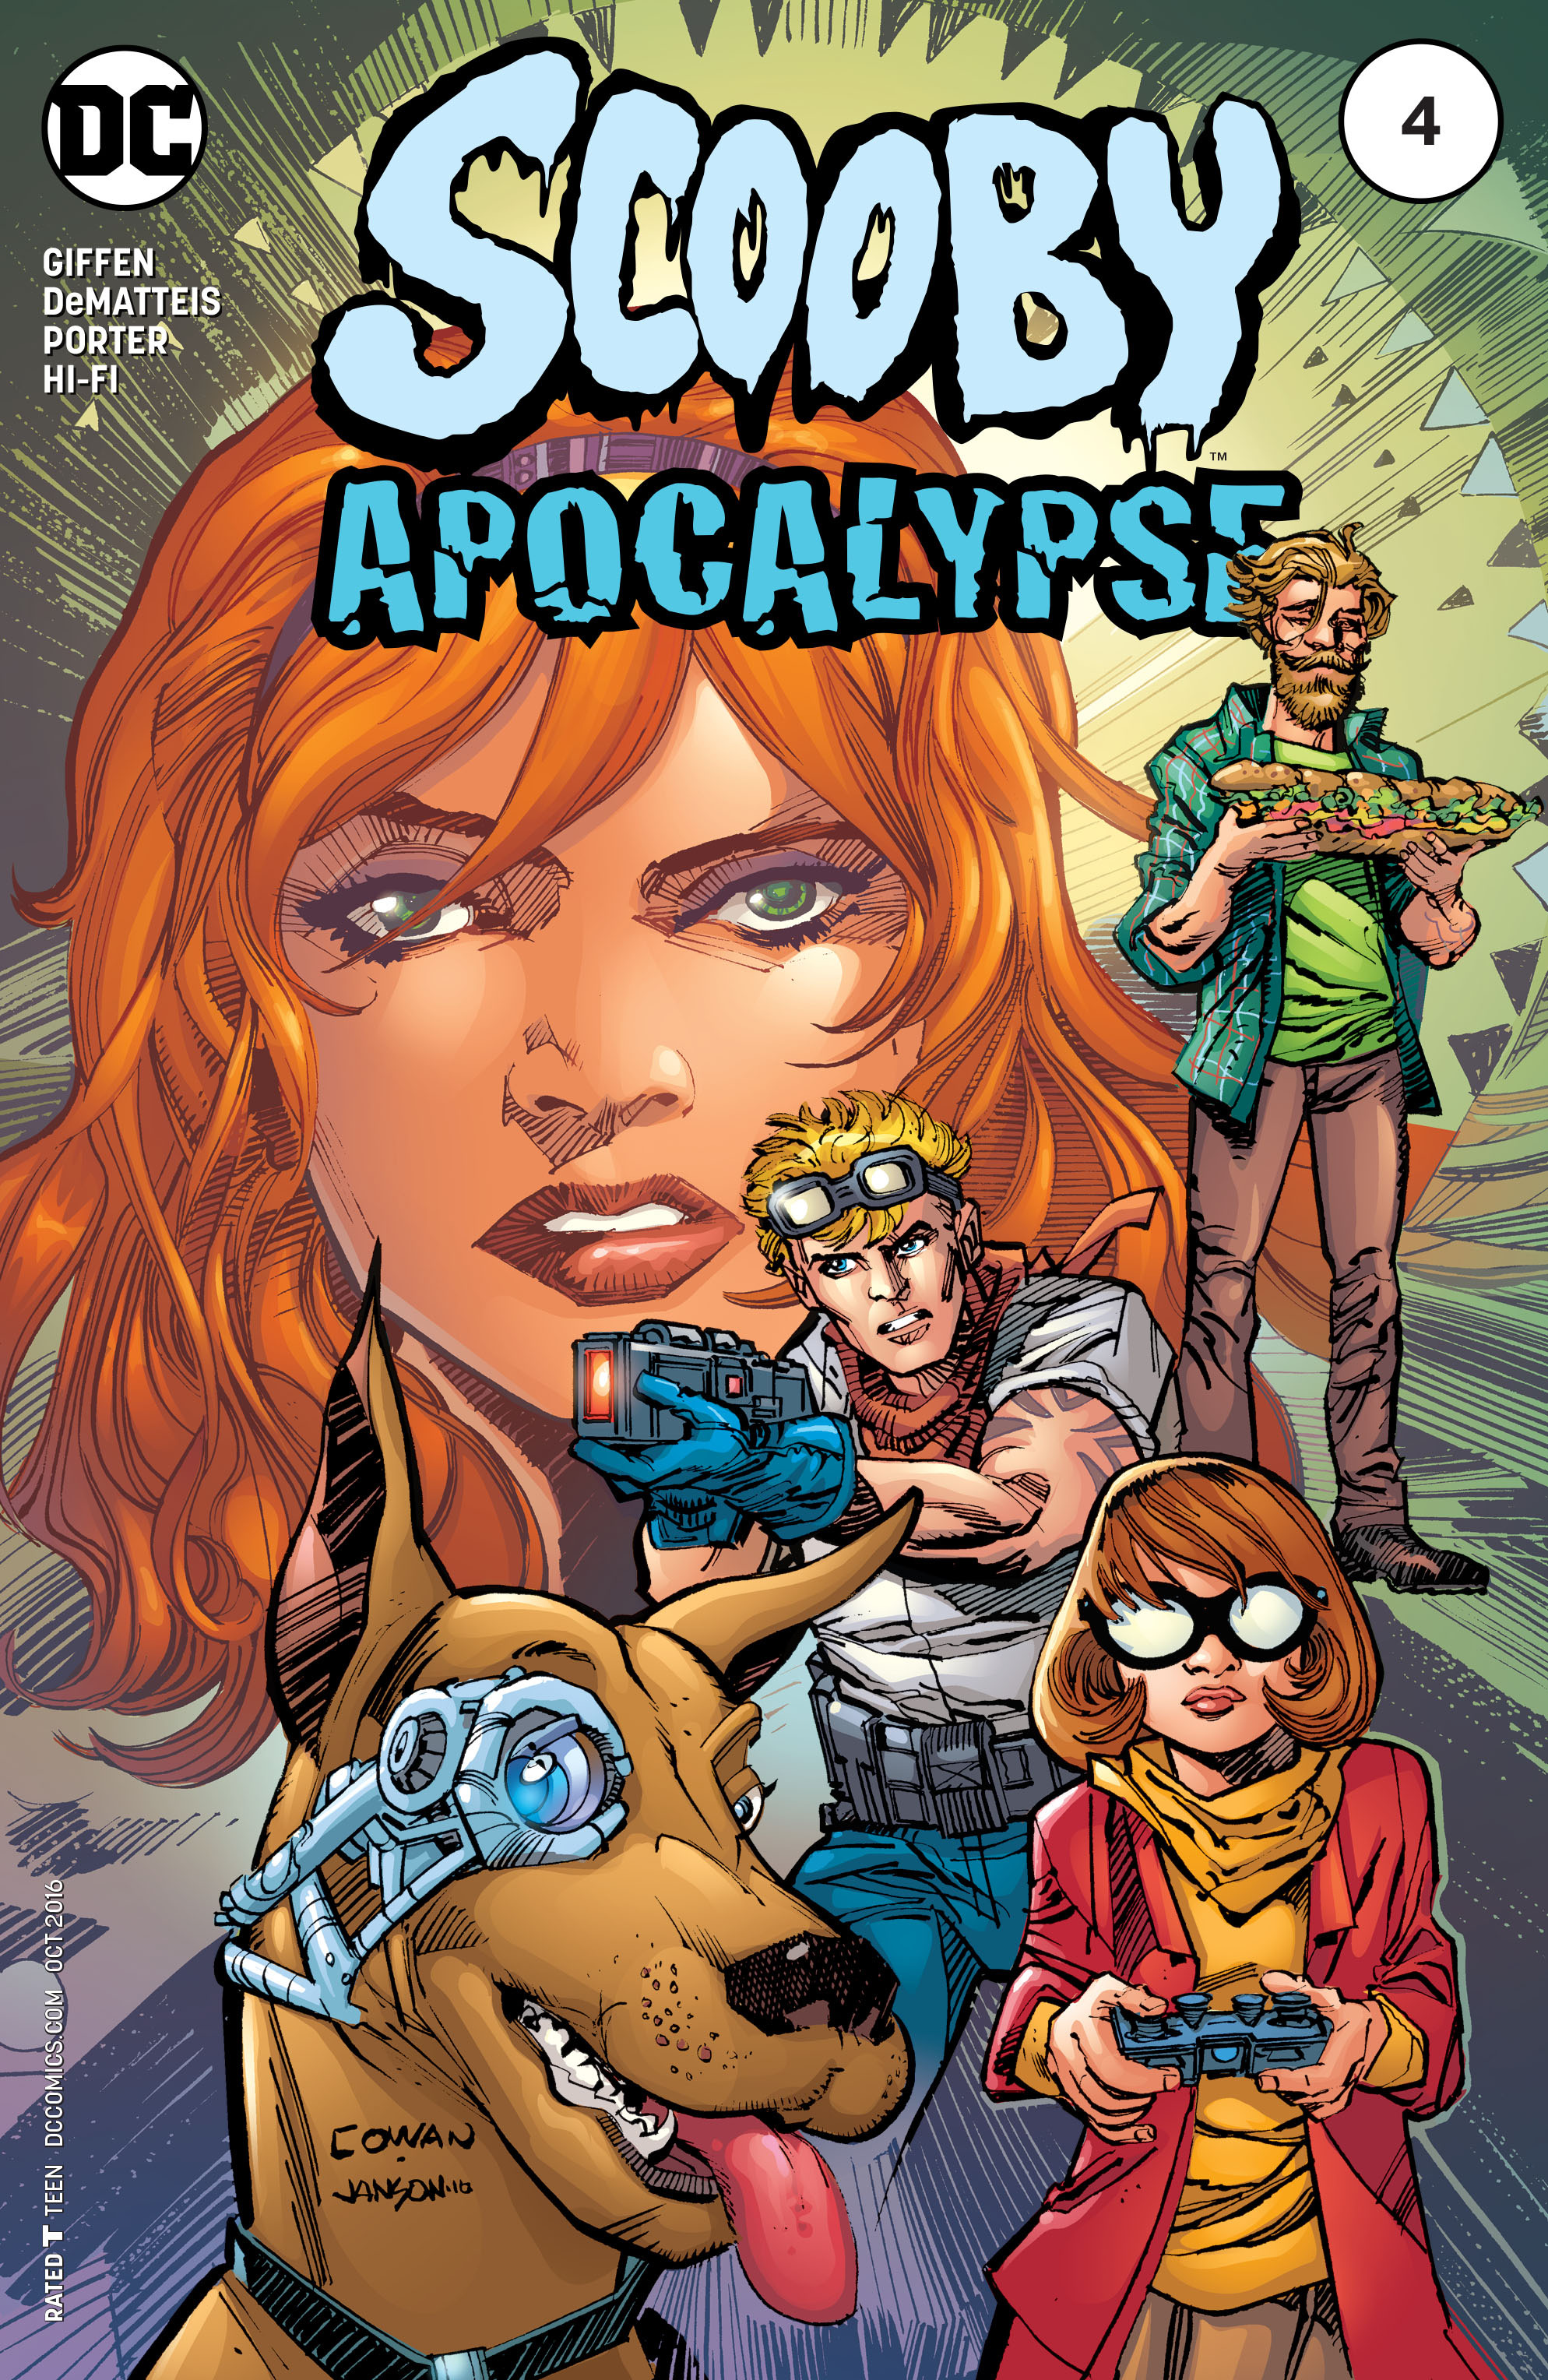 Read online Scooby Apocalypse comic -  Issue #4 - 3